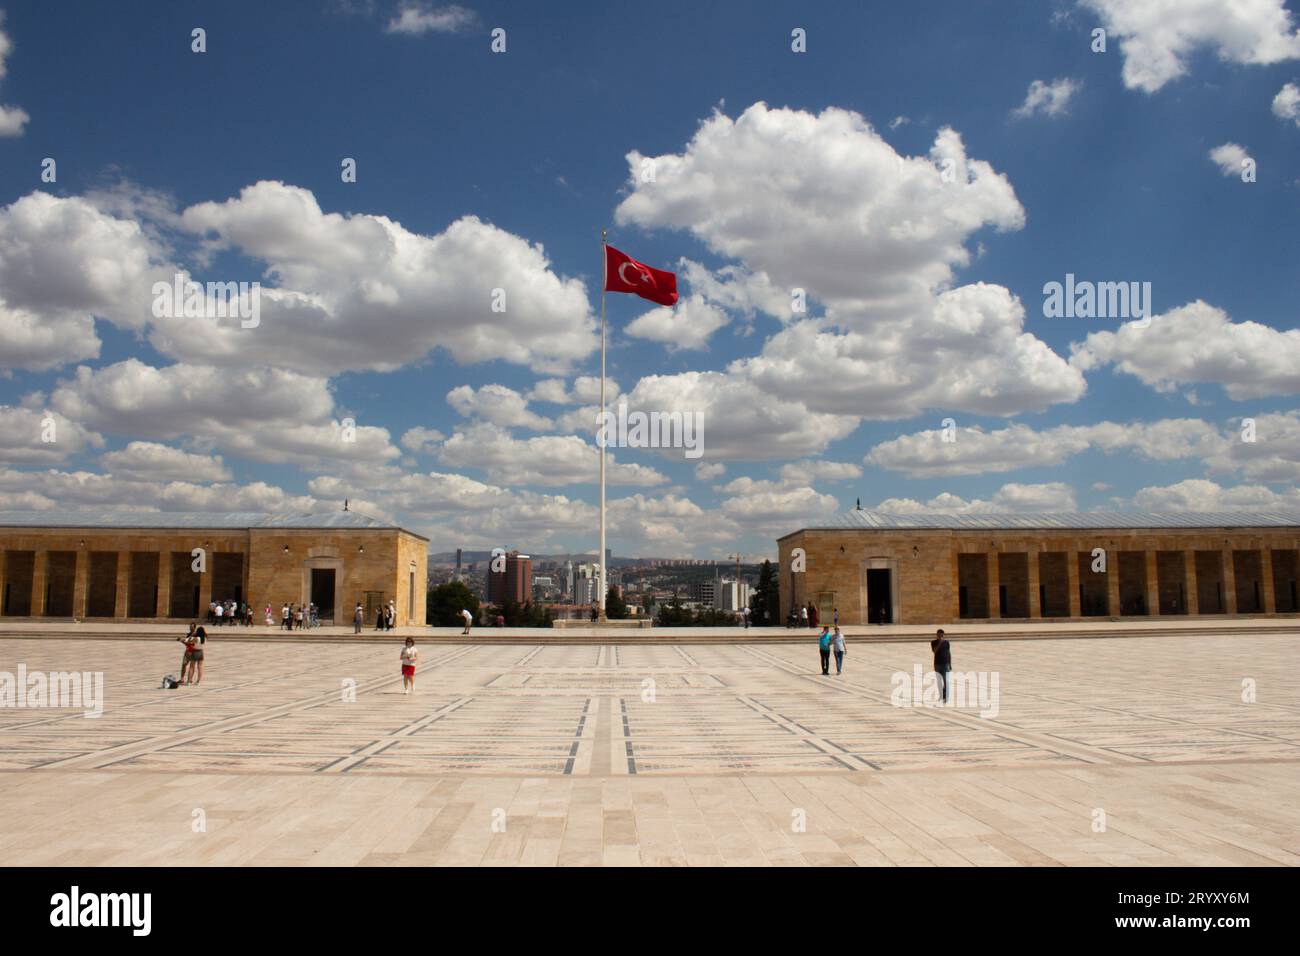 Ankara, Turkey - April 7 2016 : The Turkish flag is waving at Mustafa Kemal Atatürk's Mausoleum at Anitkabir in a cloudy weather. Stock Photo